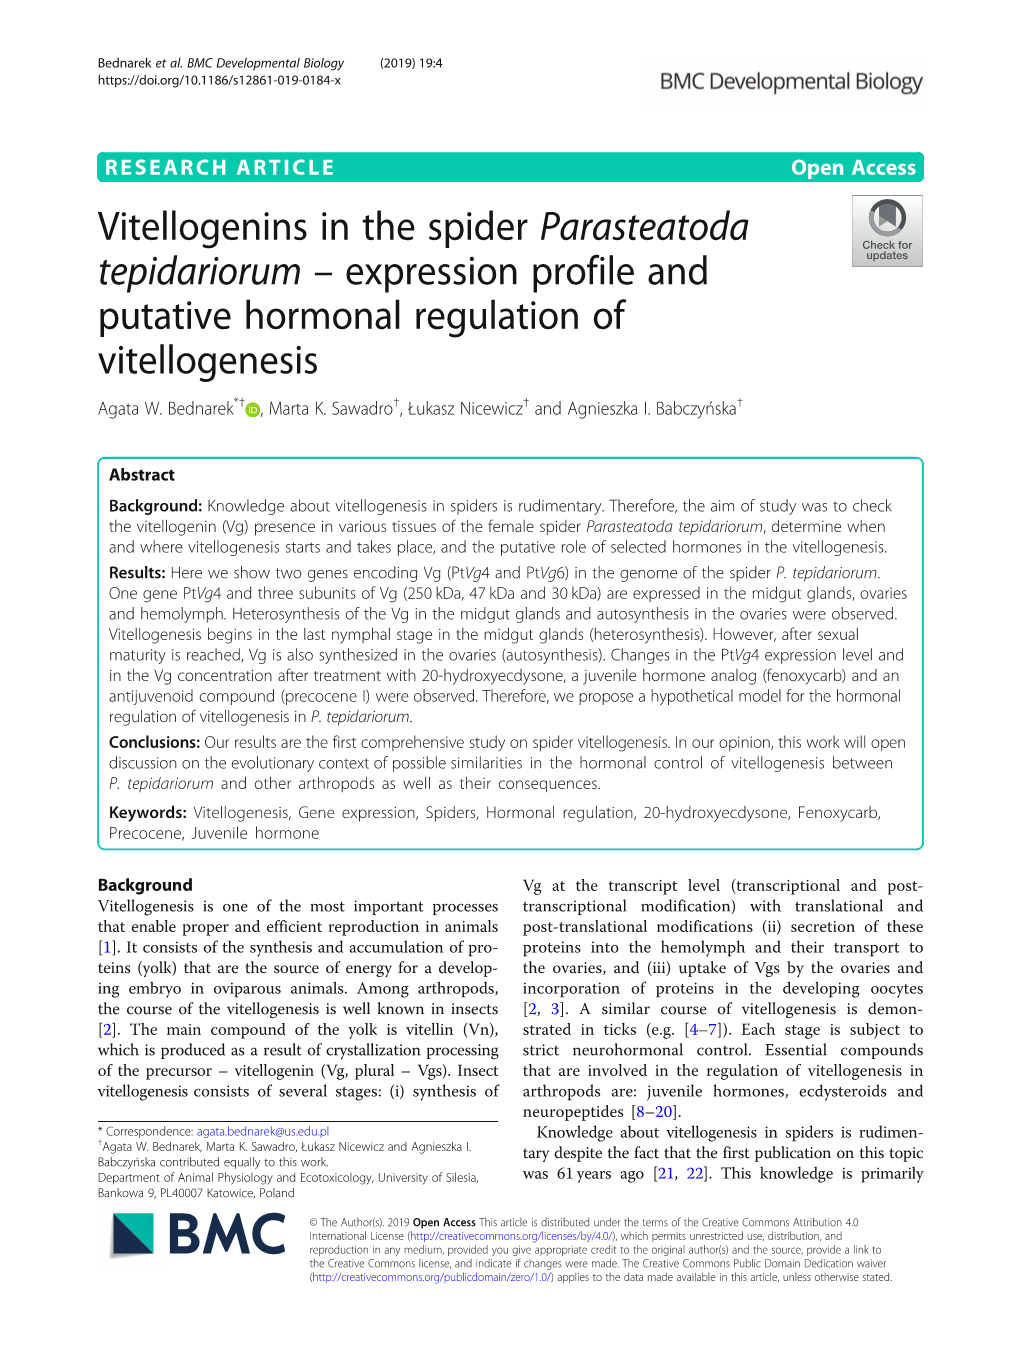 Vitellogenins in the Spider Parasteatoda Tepidariorum – Expression Profile and Putative Hormonal Regulation of Vitellogenesis Agata W